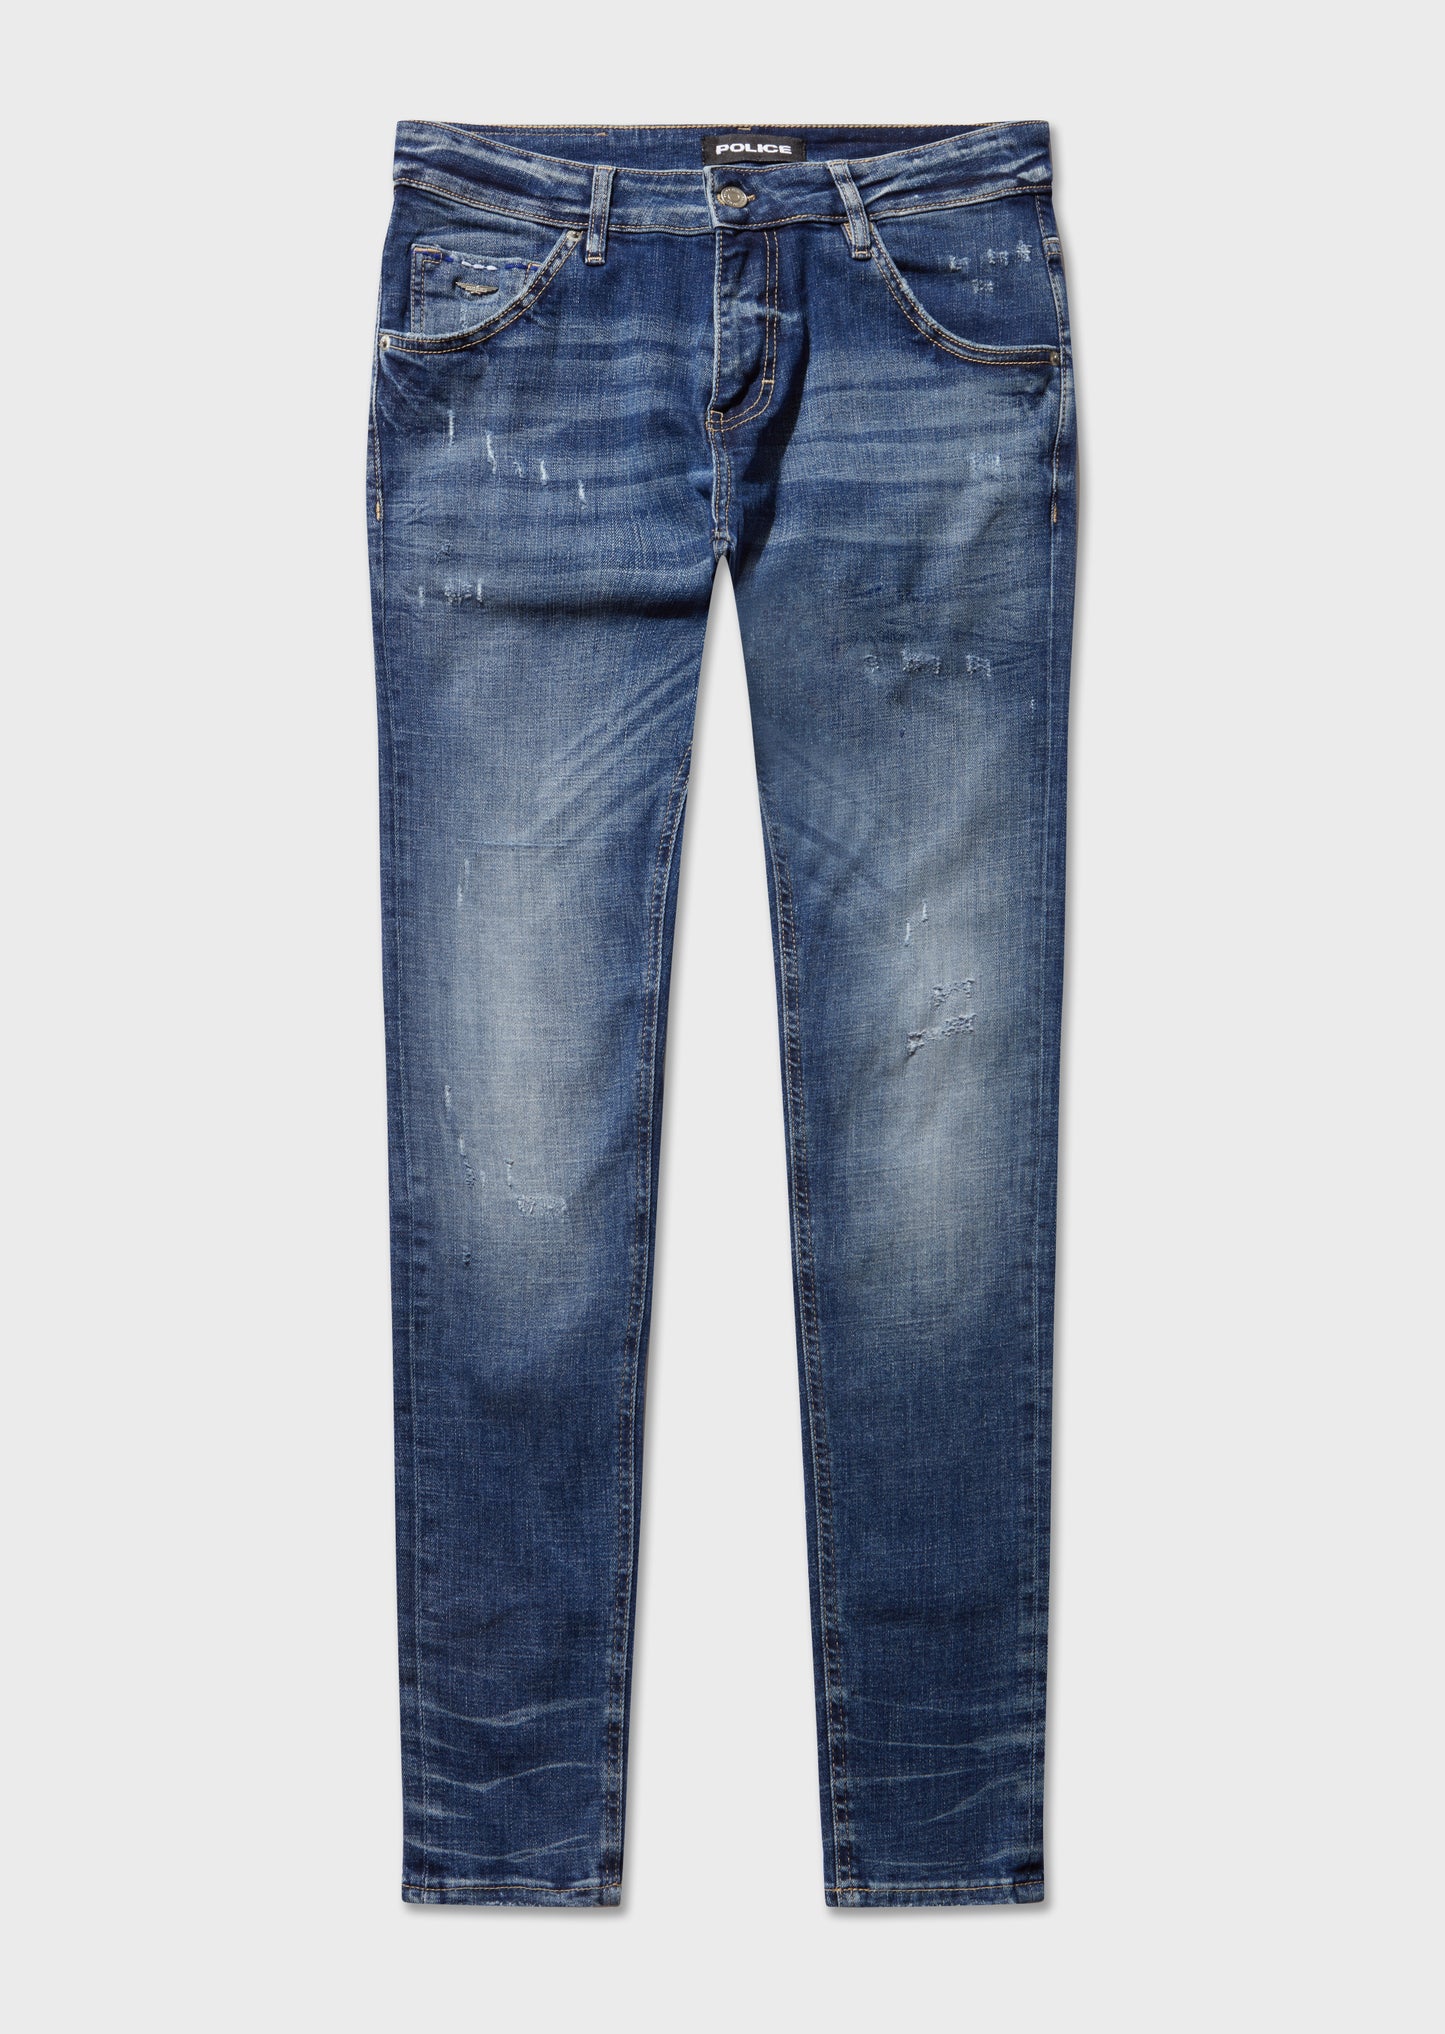 Deniro LAT 939 Slim Fit Jeans